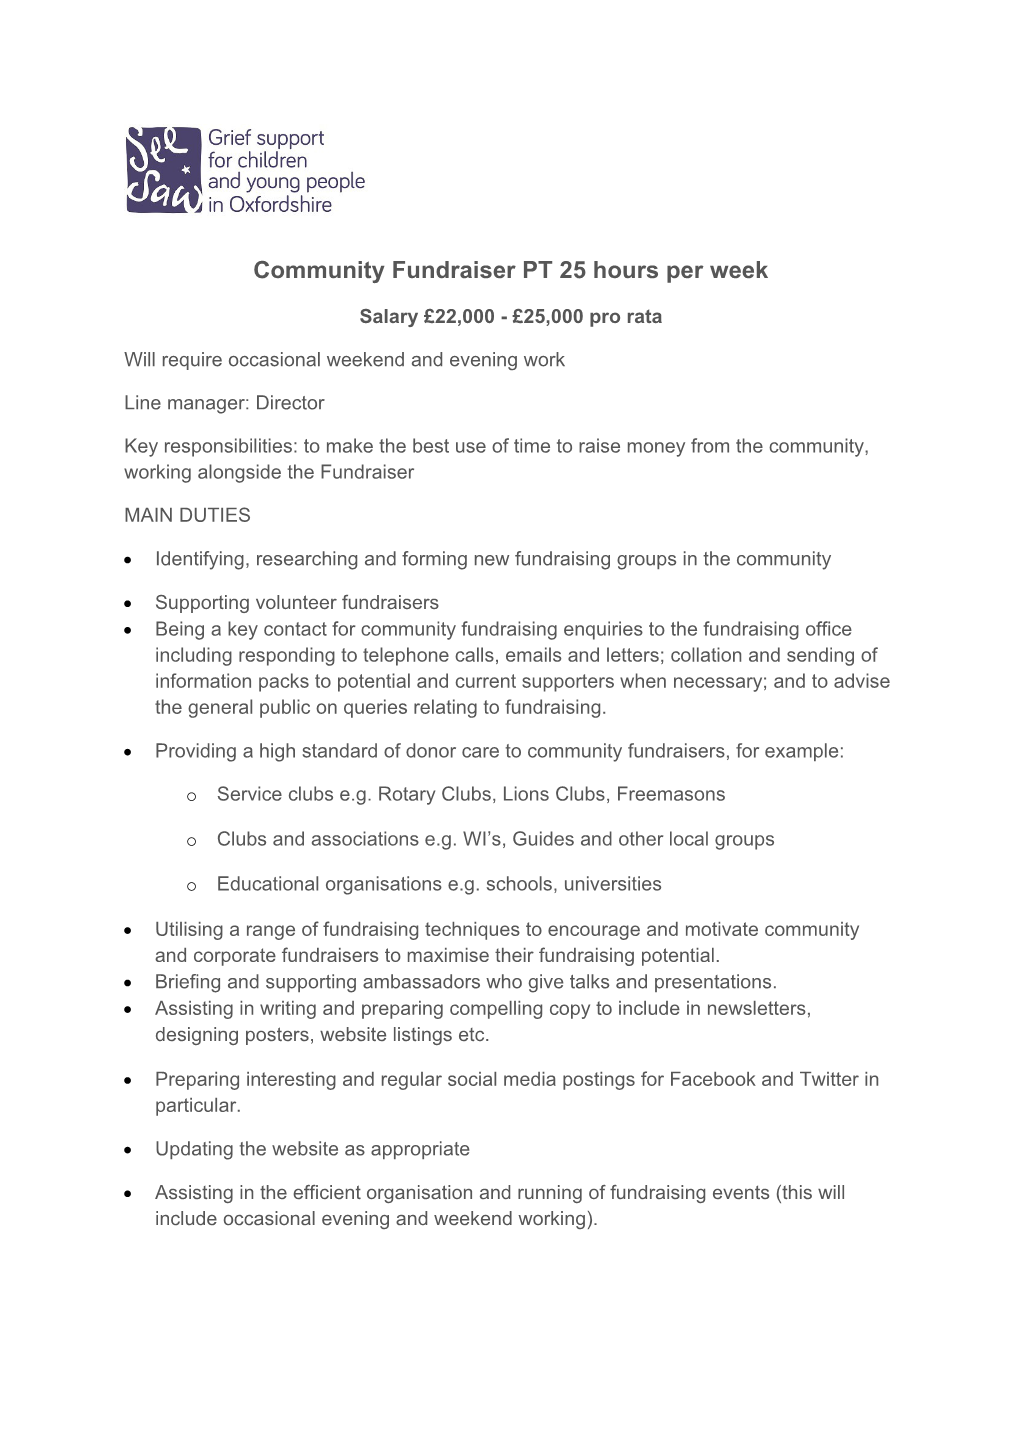 Community Fundraiser PT 25 Hours Per Week